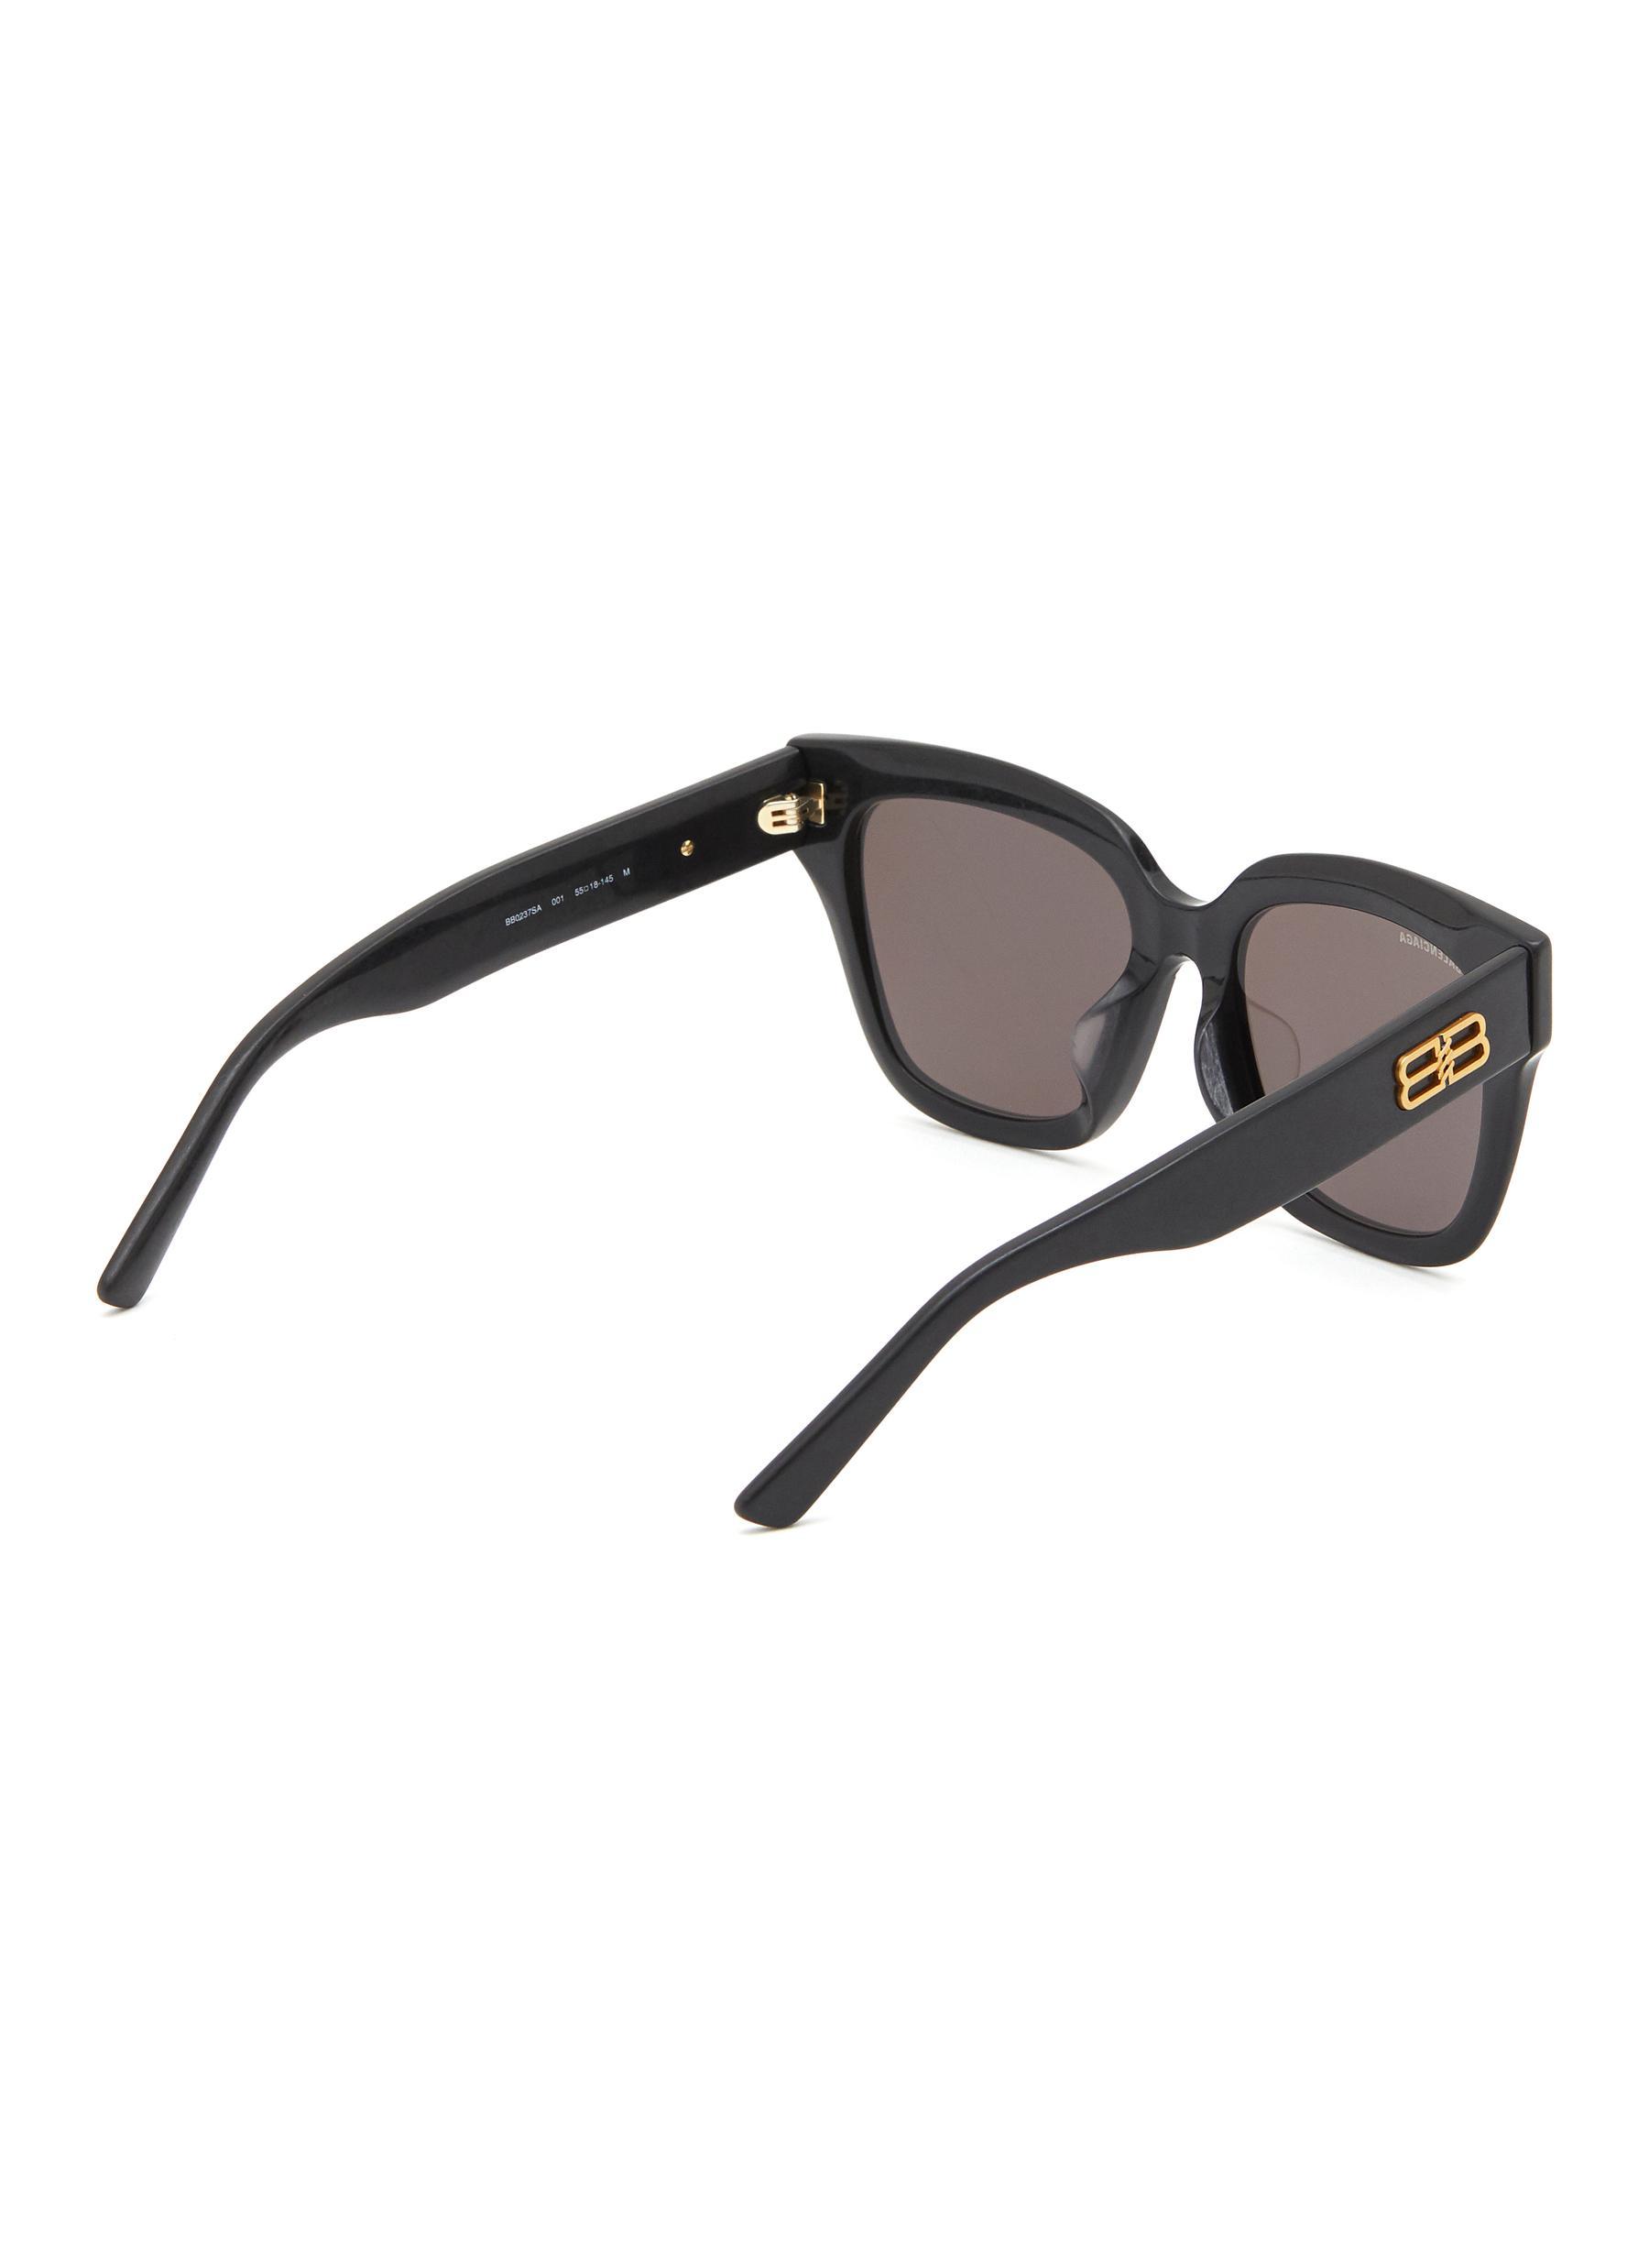 Balenciaga Black wayfarerstyle sunglasses  Harvey Nichols